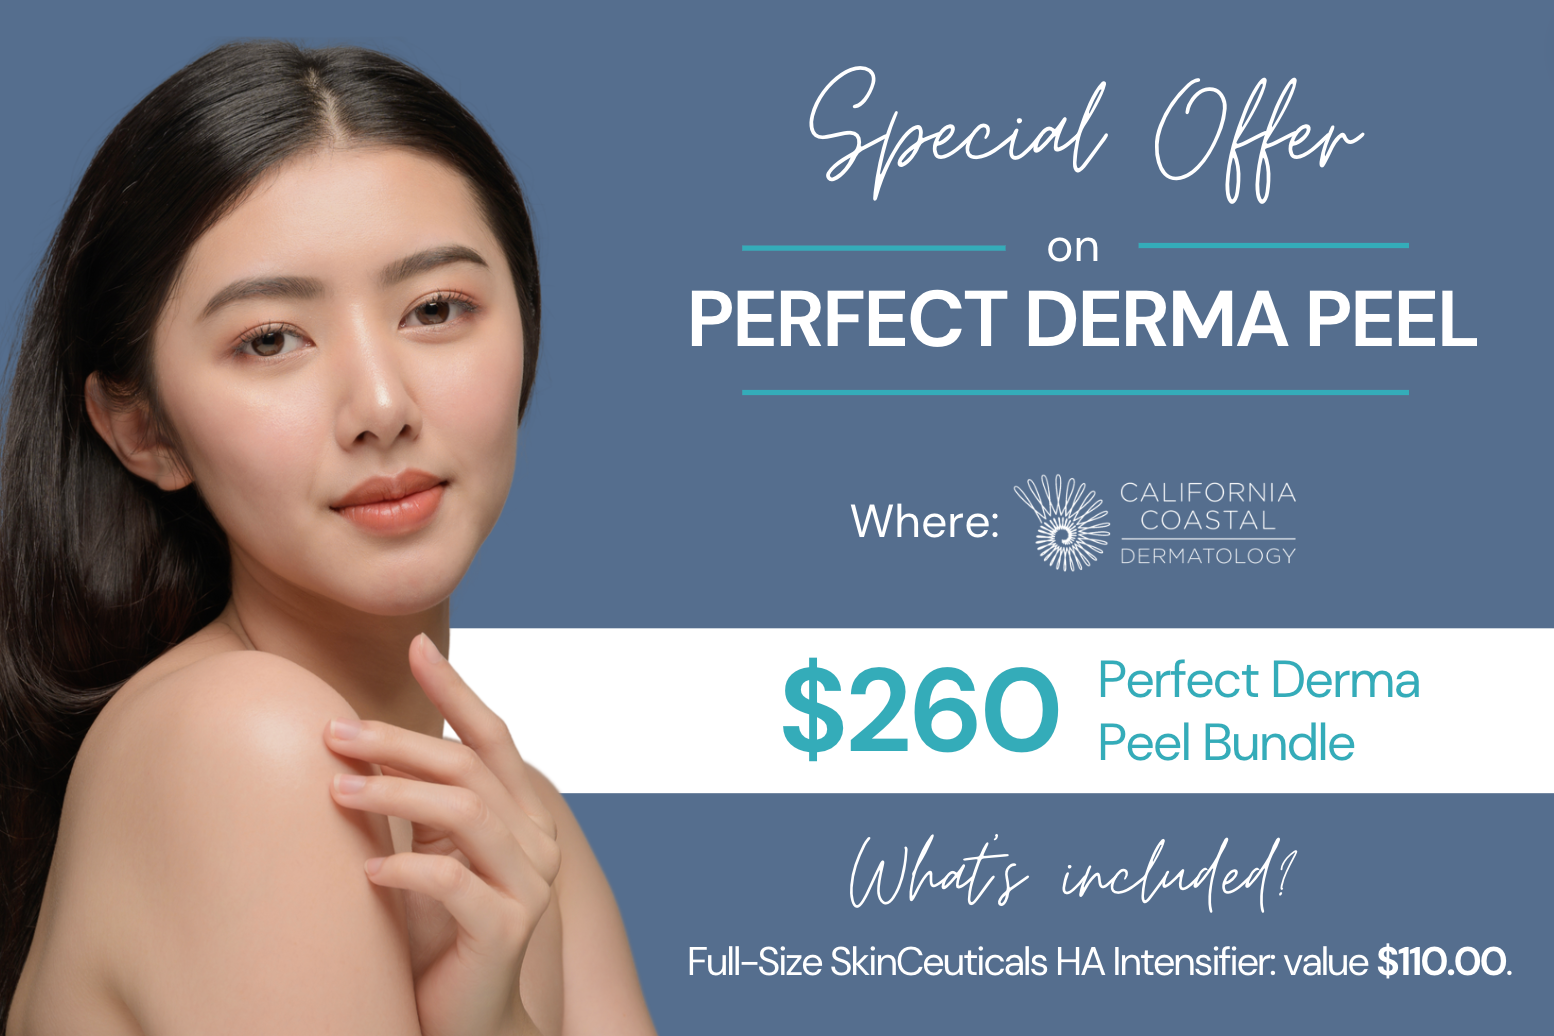 $260 derma peel bundle - includes full sized skinceuticals HA intensifier 